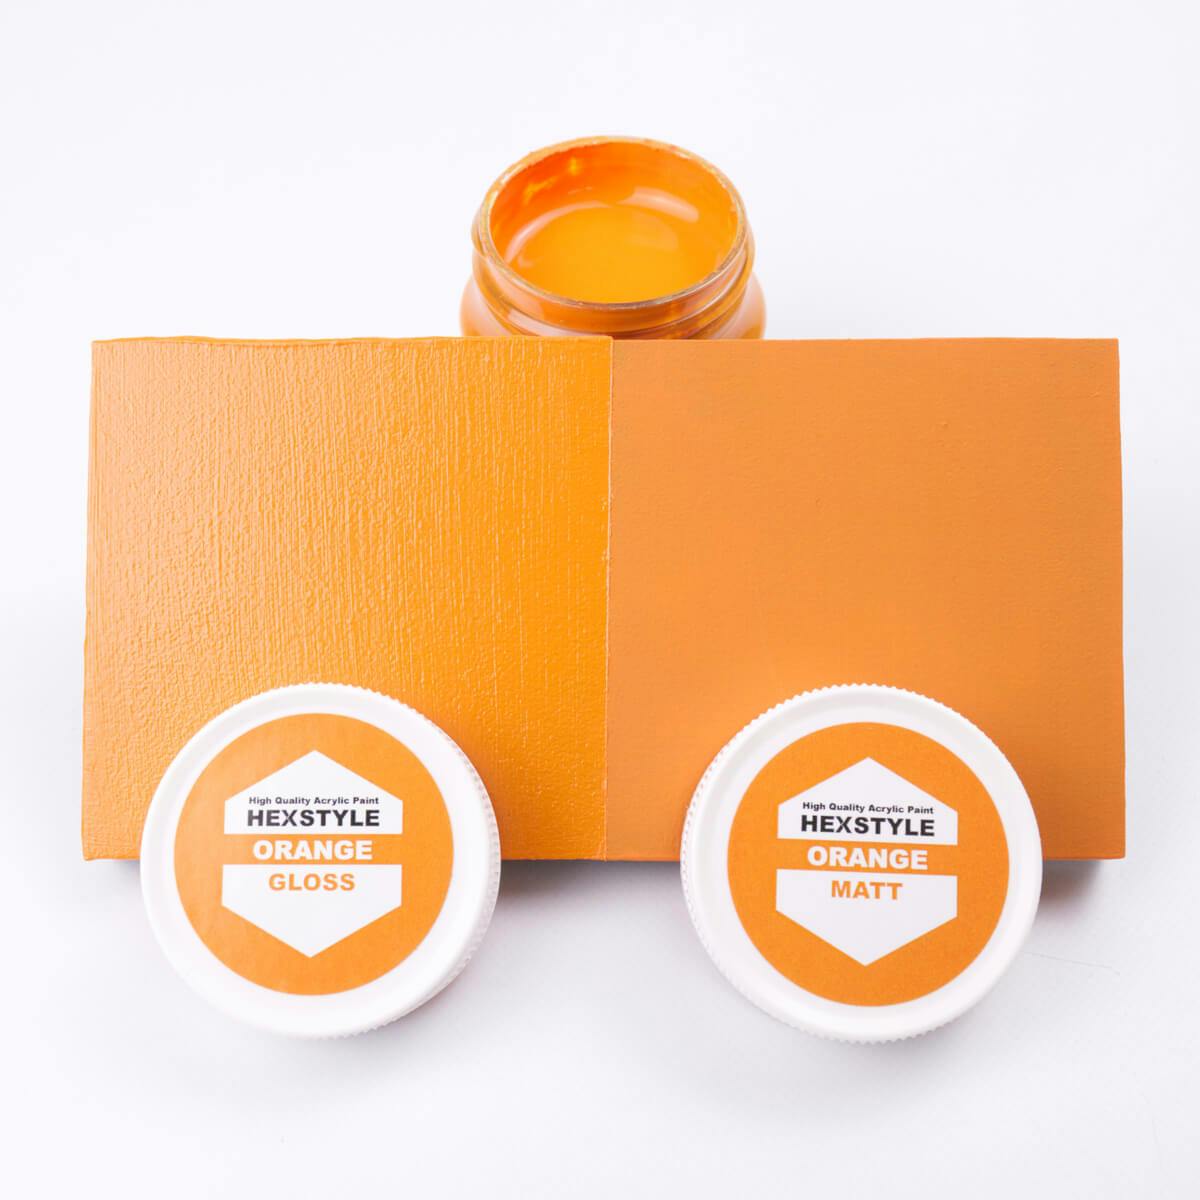 Hexstyle gloss and matt orange colour swatch